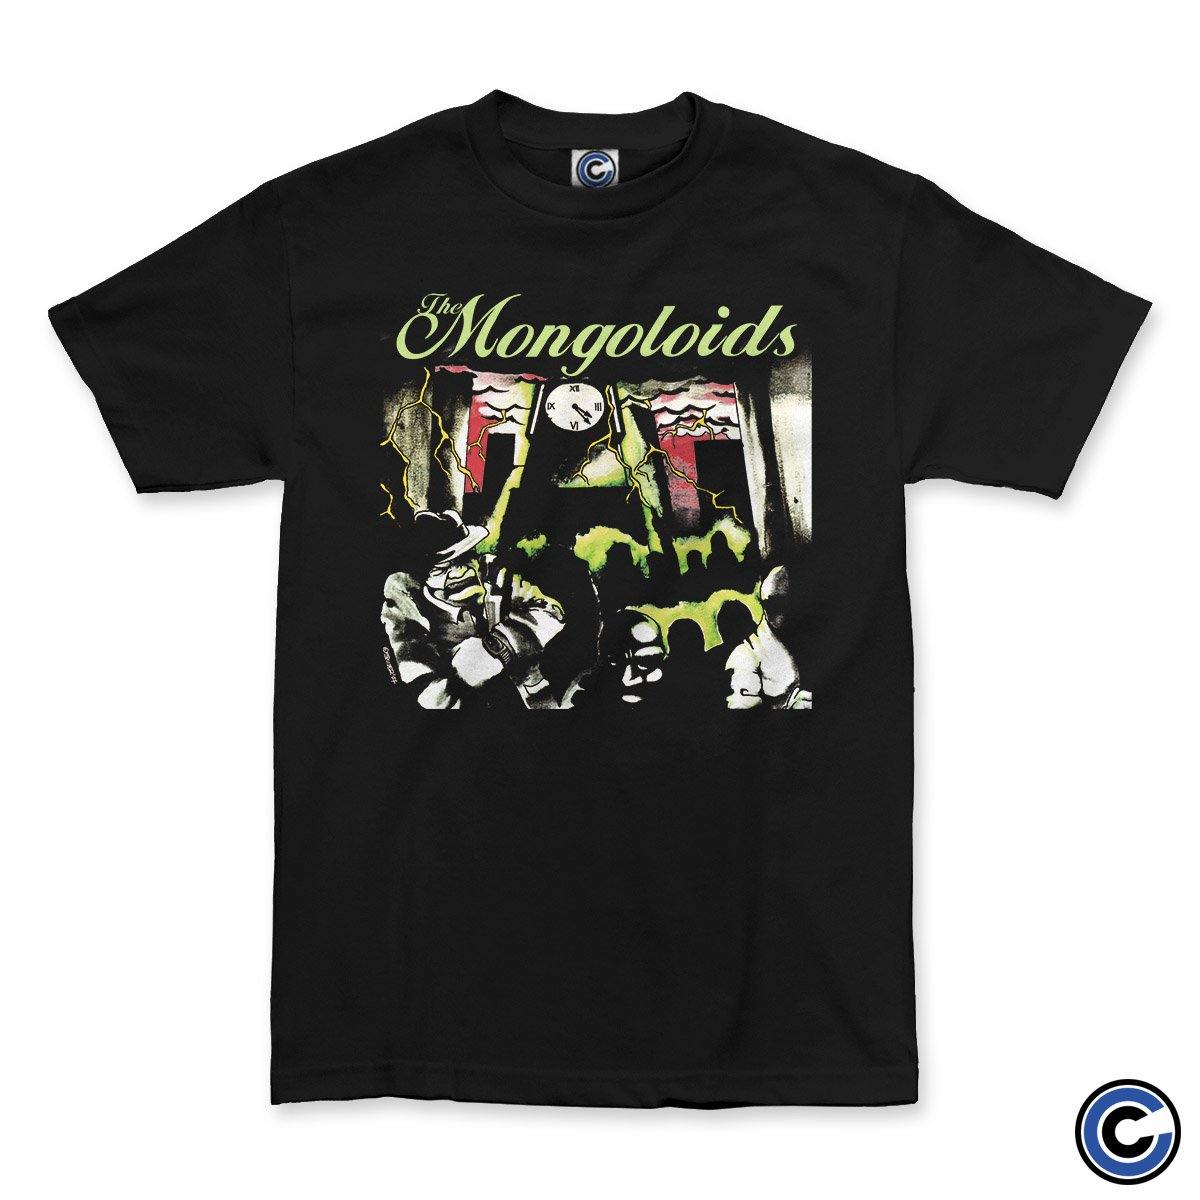 Buy – The Mongoloids "Time Trials" Shirt – Band & Music Merch – Cold Cuts Merch